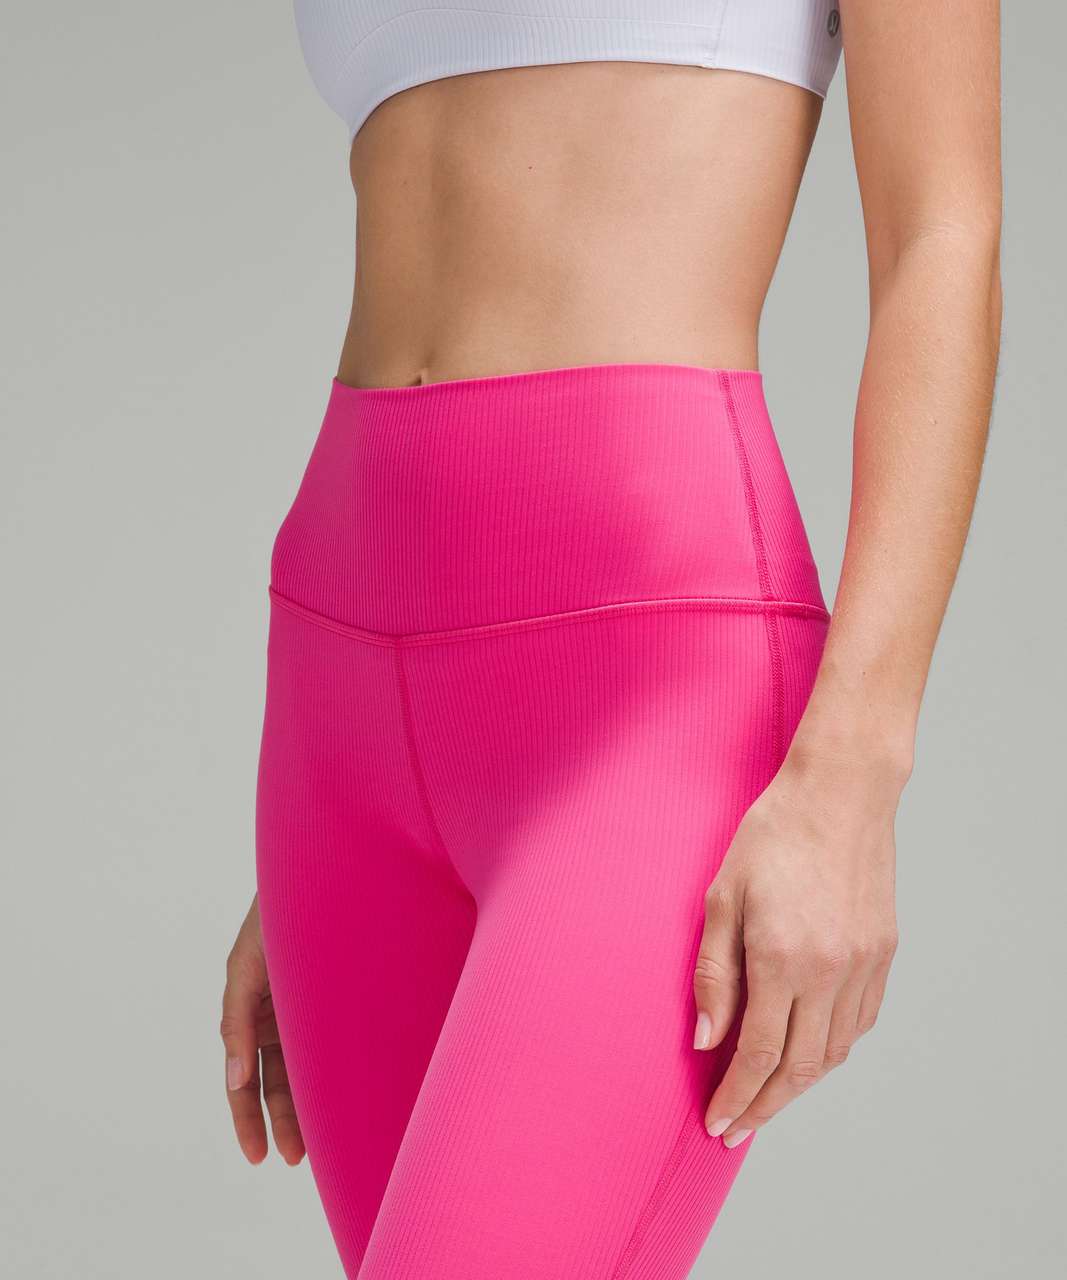 Lululemon Wunder Under Leggings Sonic Pink Size 2 - $56 (52% Off Retail) -  From manasi